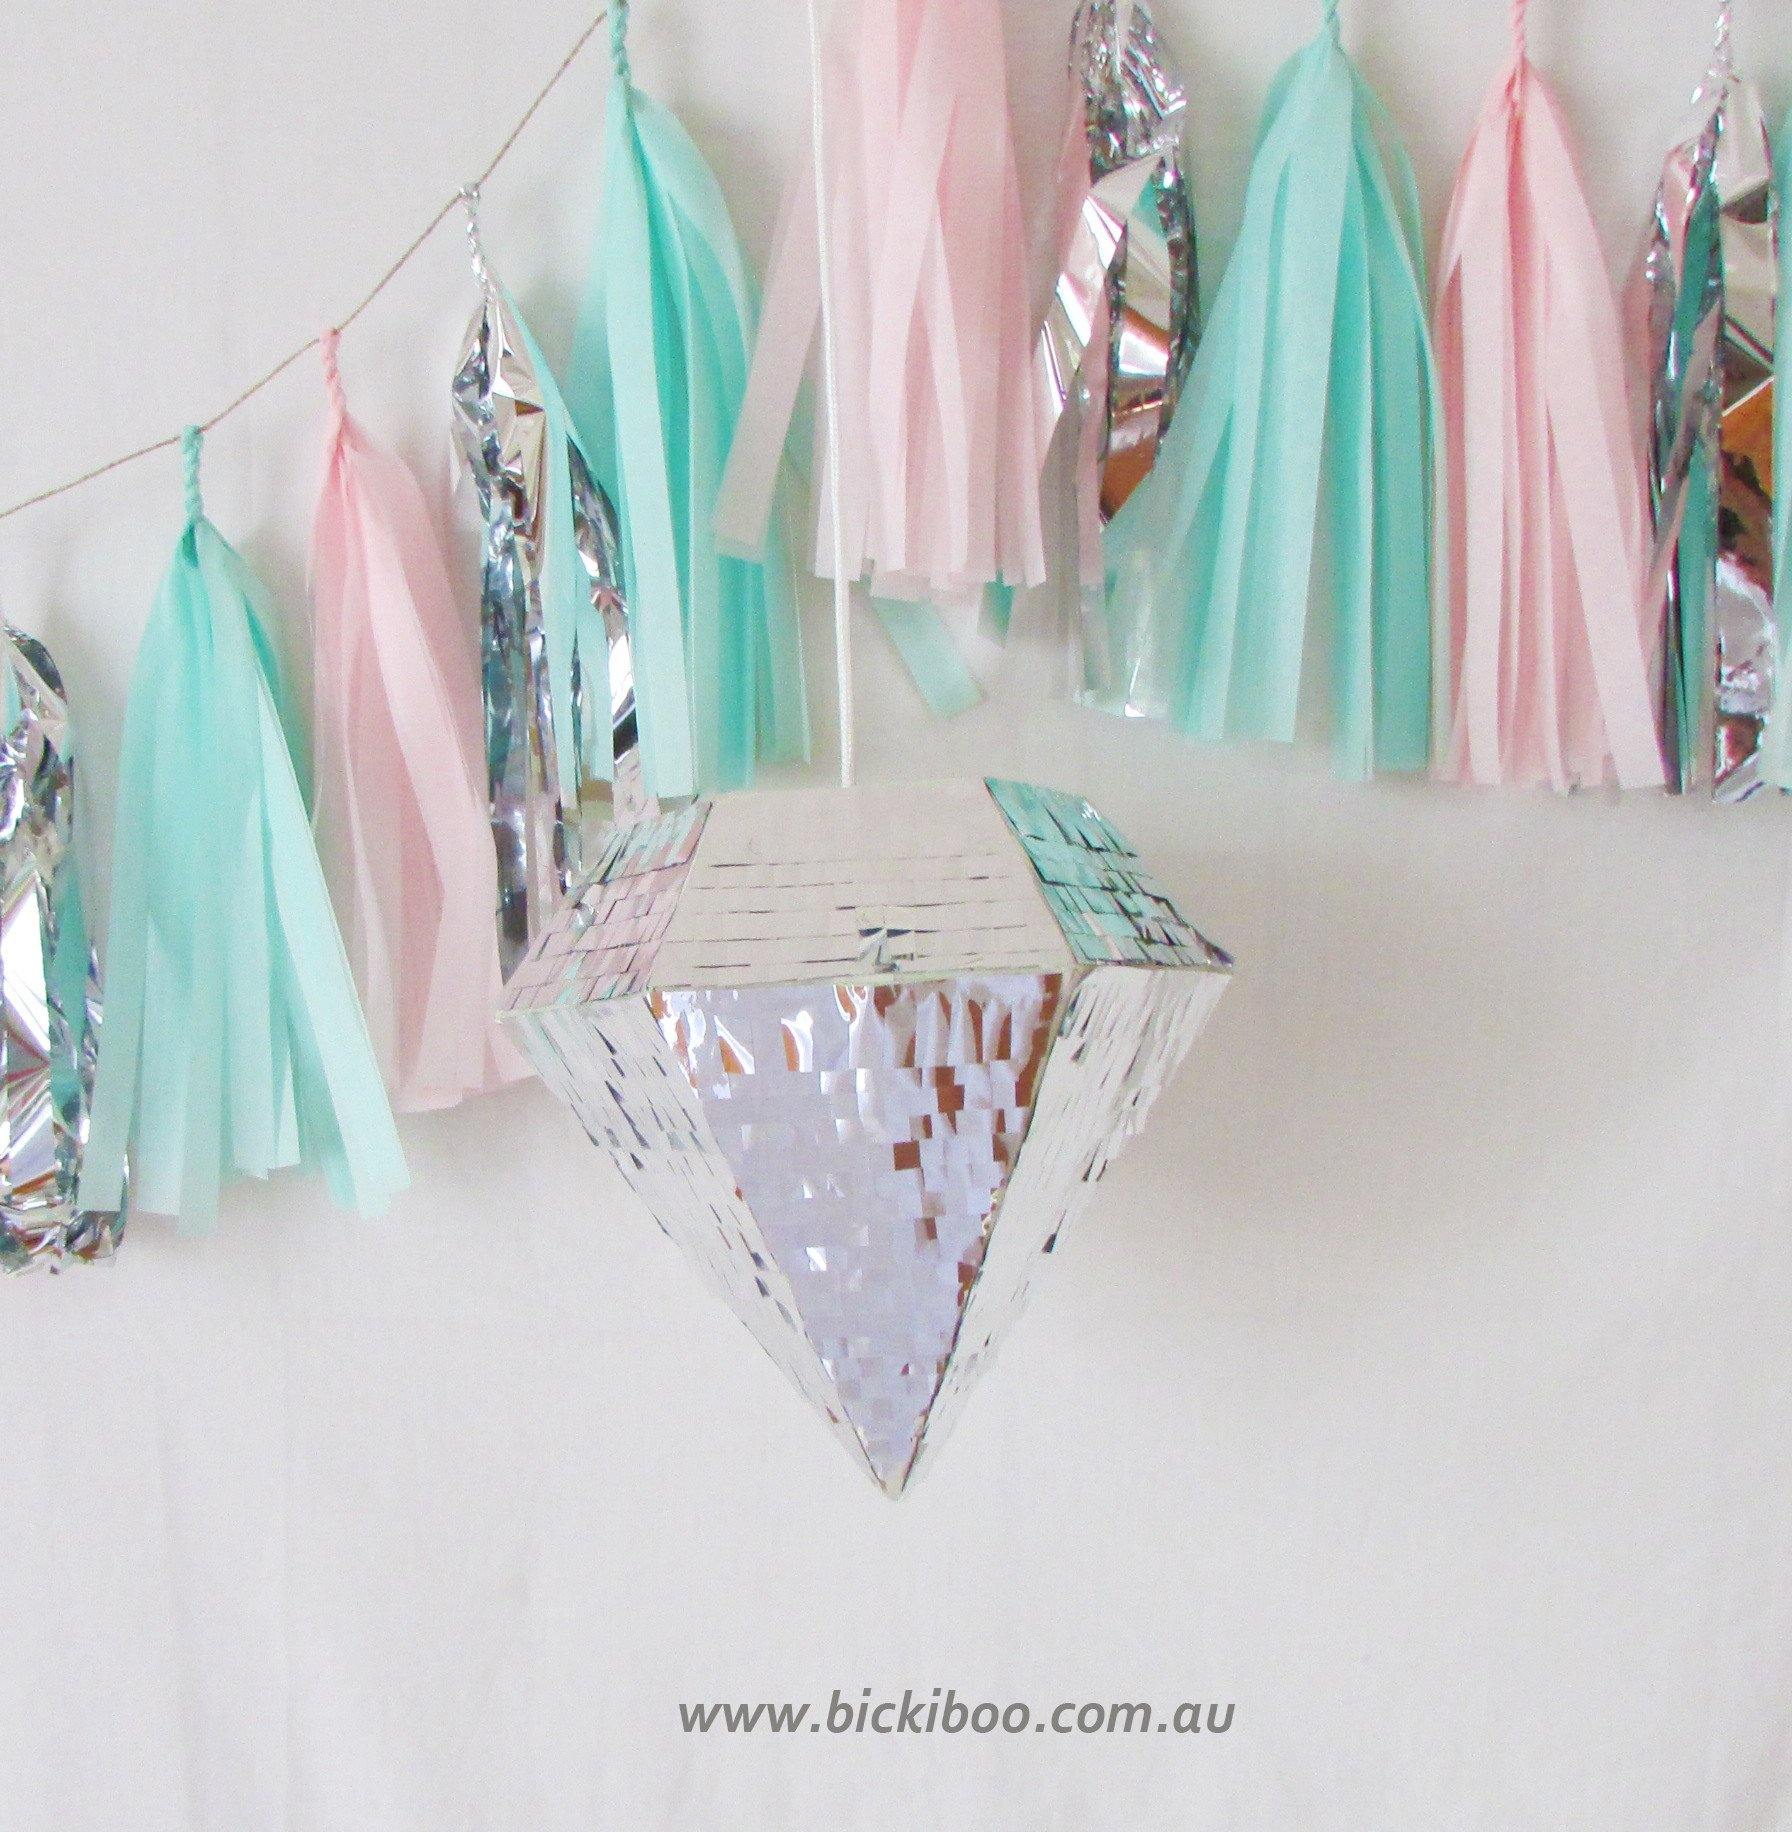 Diamond Piñata - Bickiboo Designs